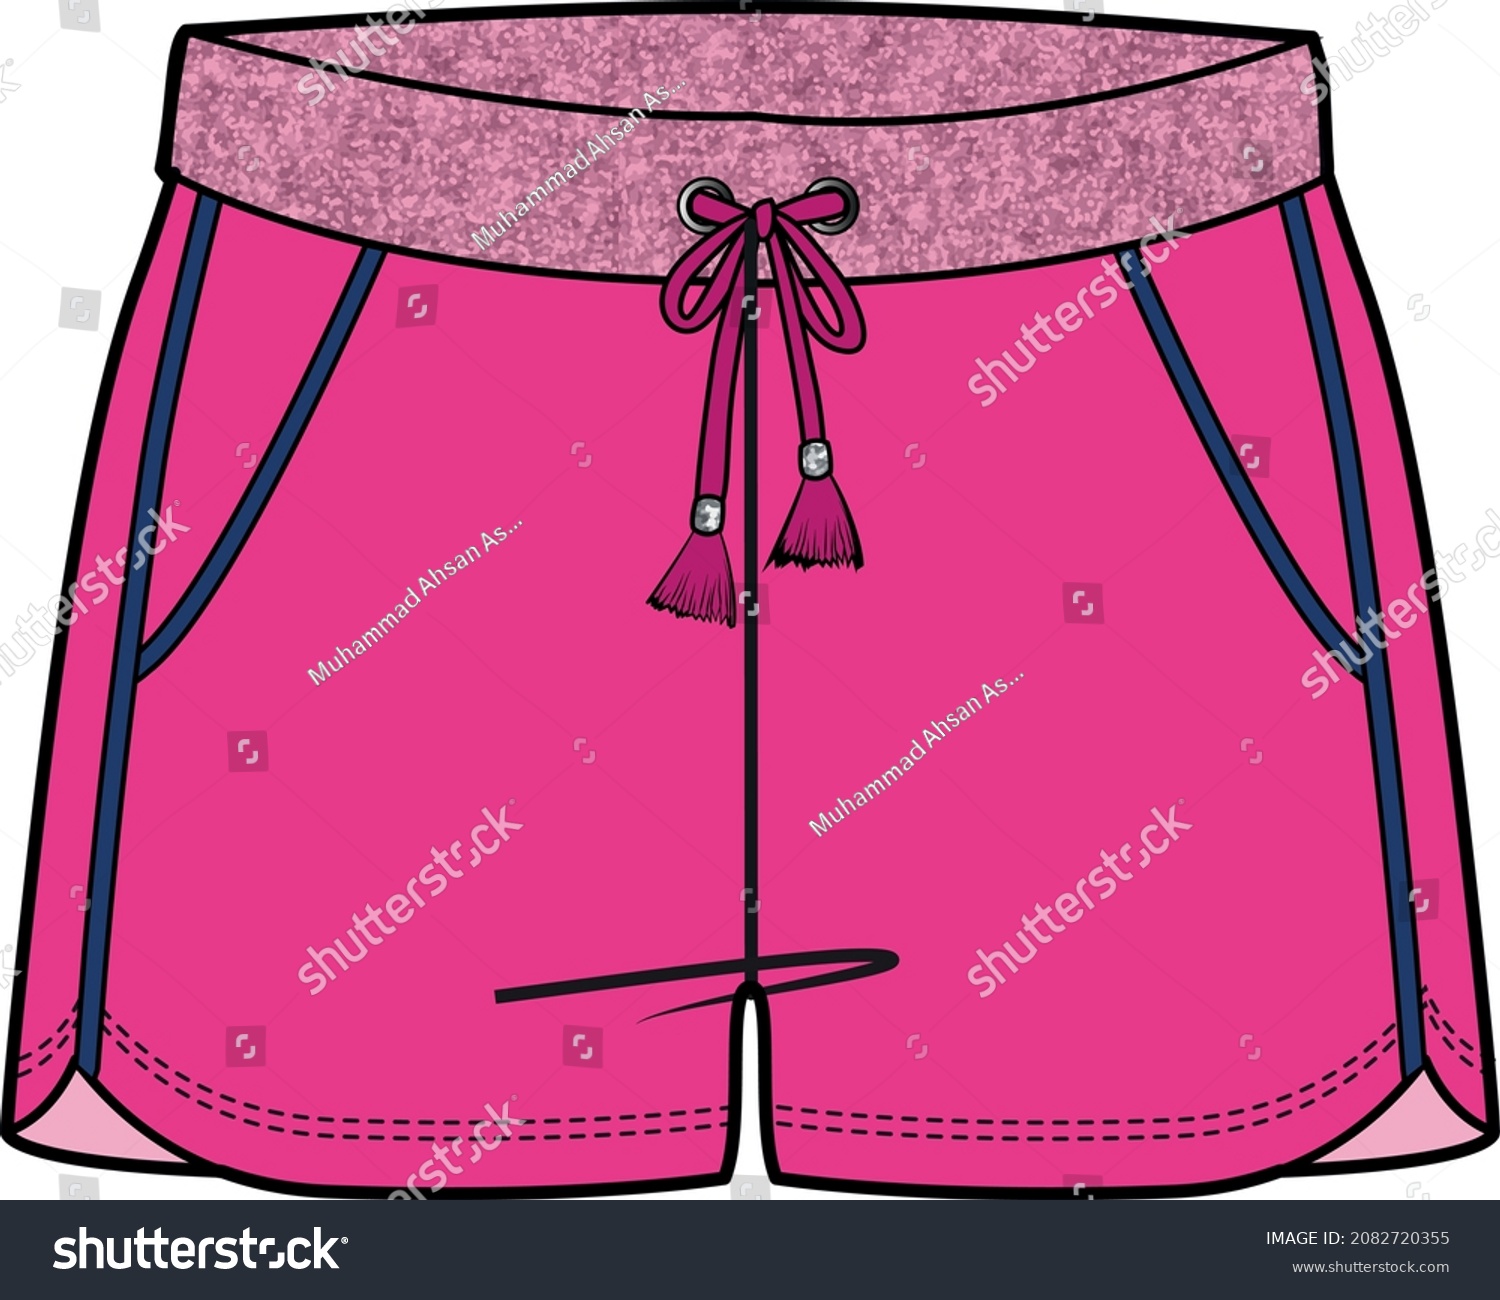 Girls Teen Bottom Wear Knit Skirts Stock Vector (Royalty Free ...